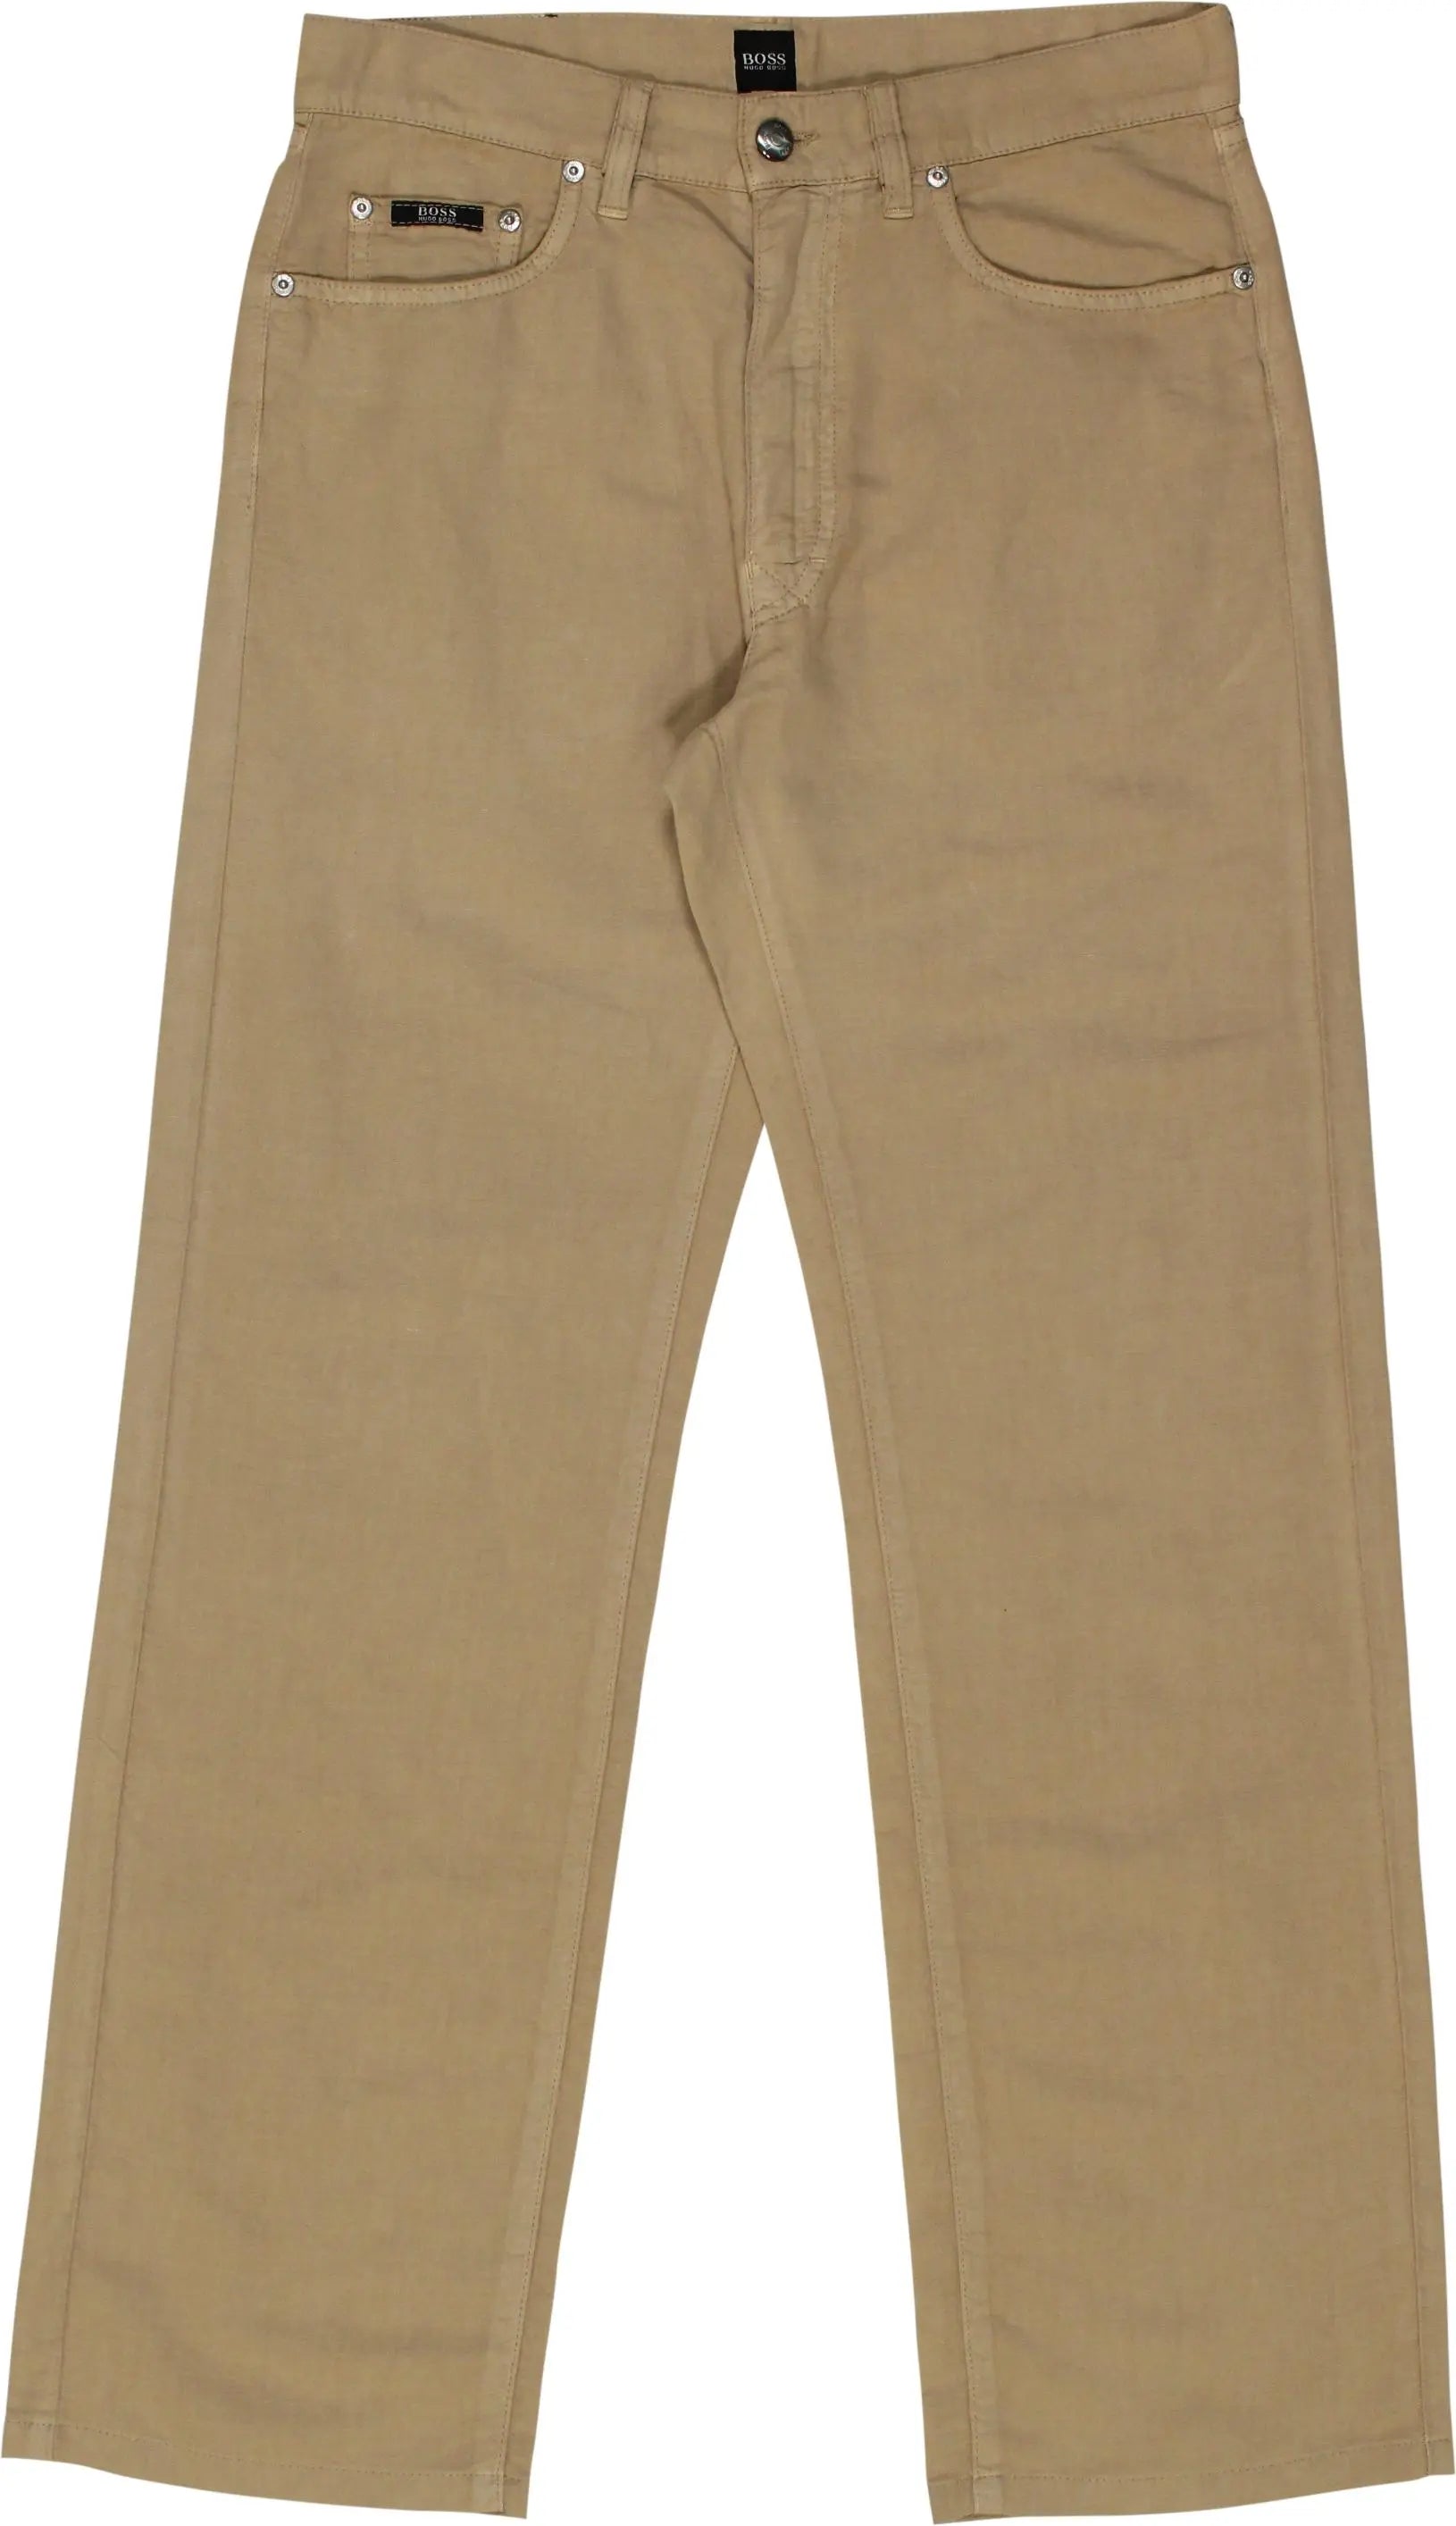 Vintage trousers for men